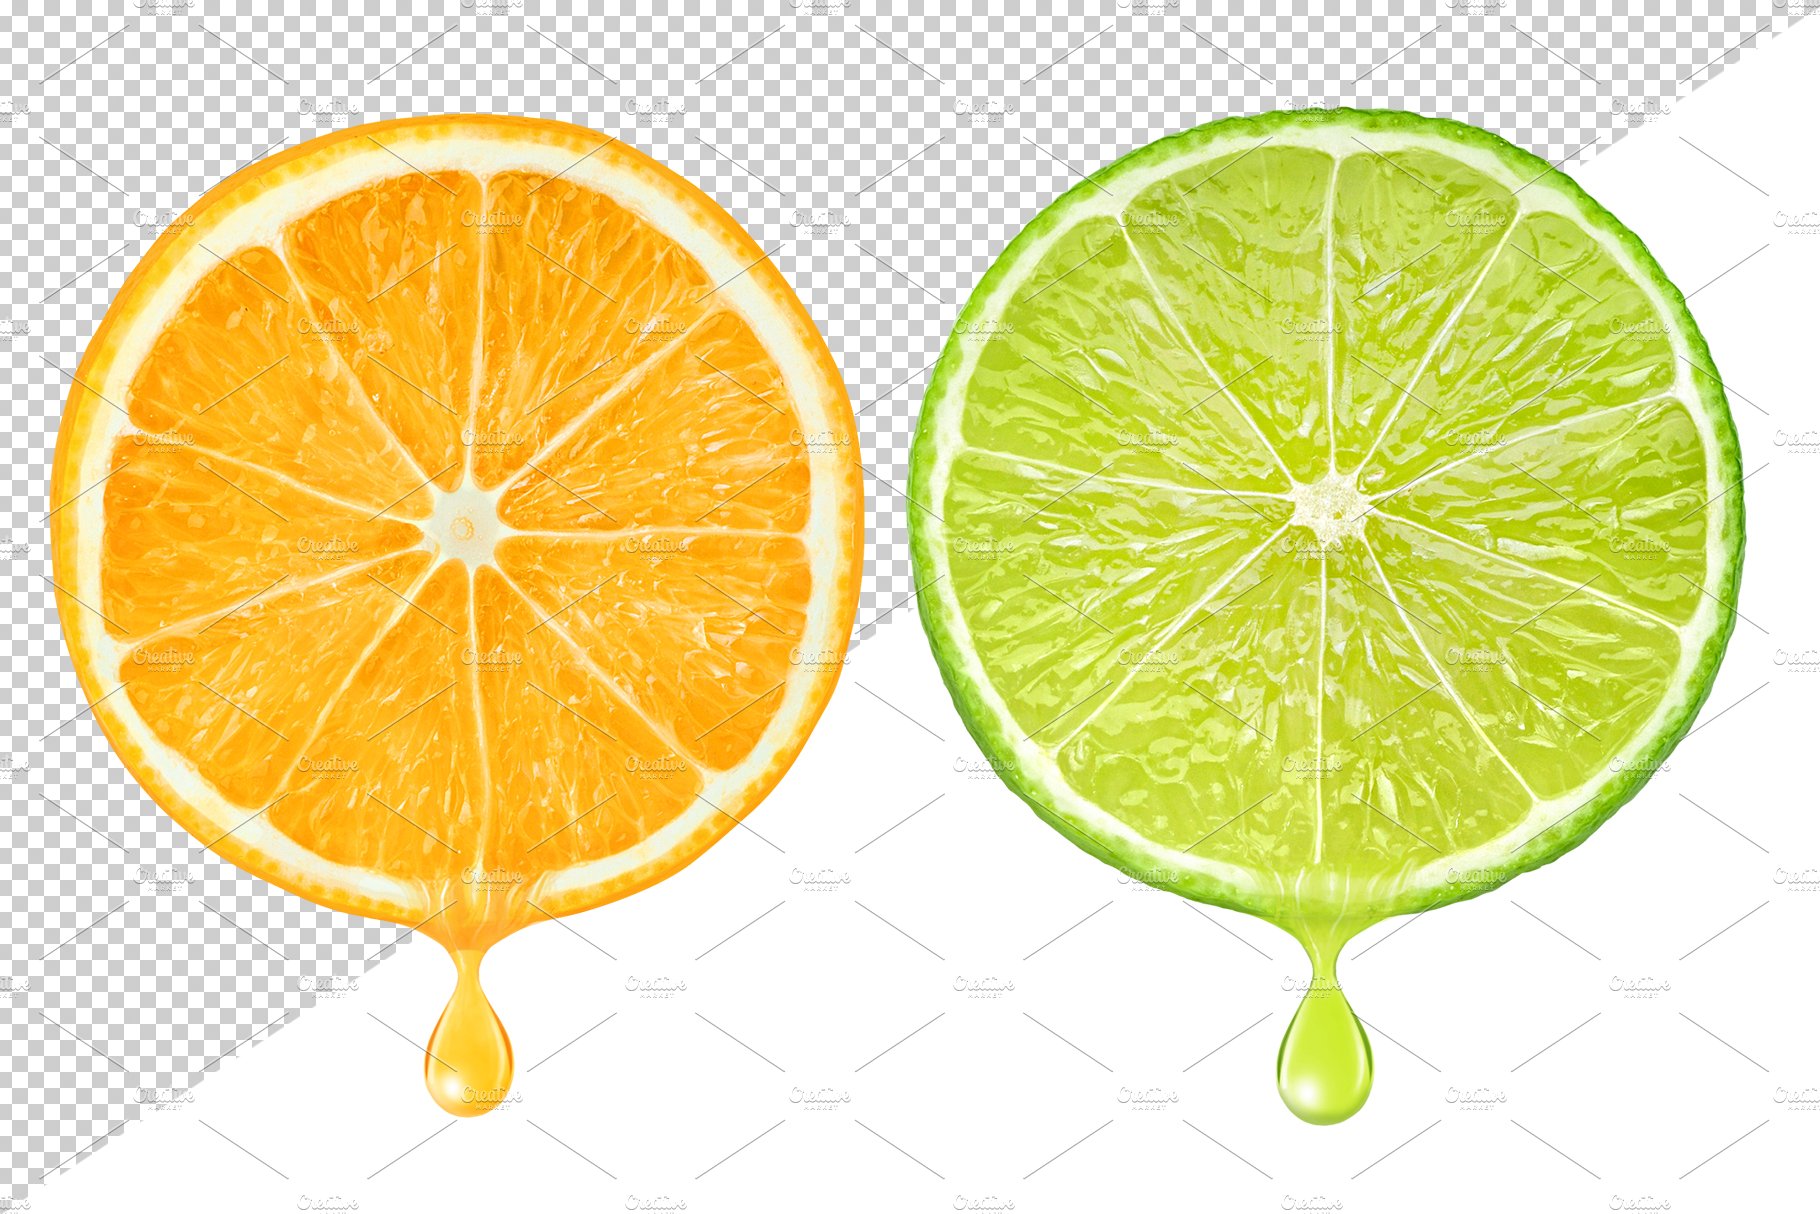 Citrus slices with juice drop preview image.